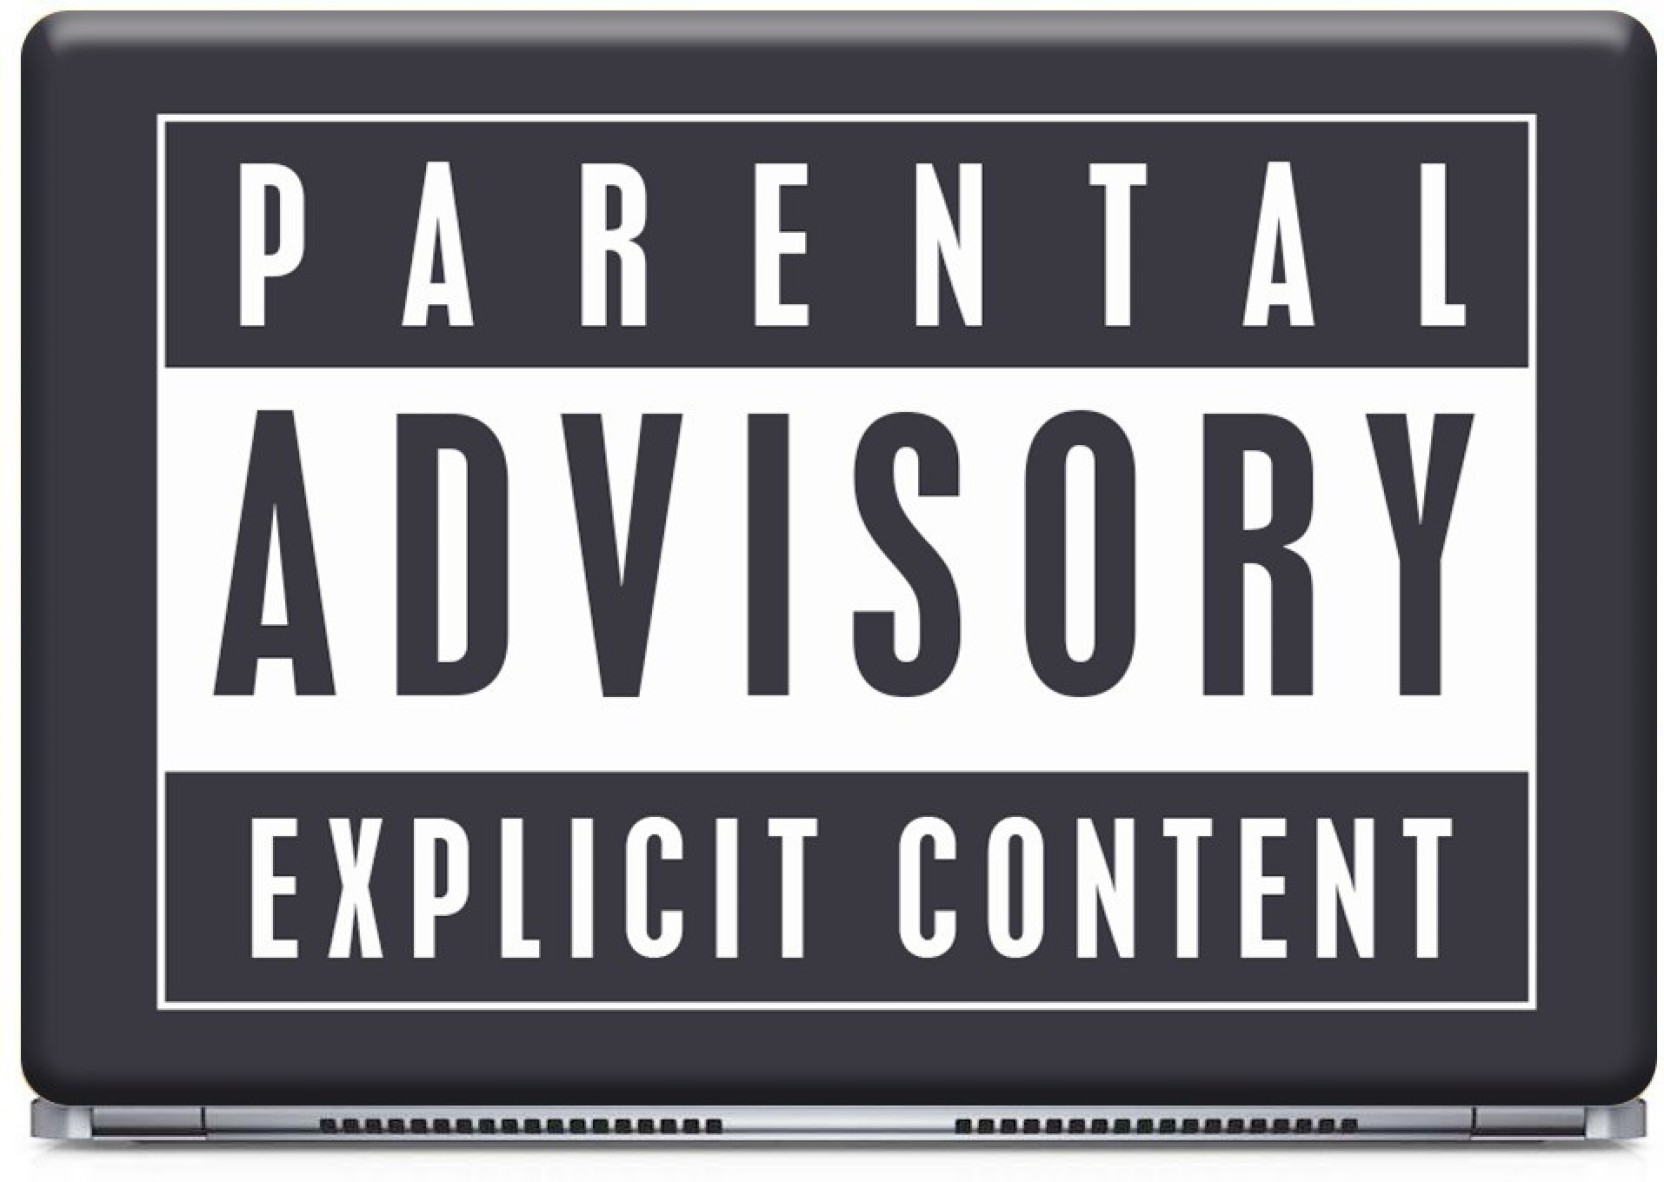 Parental Advisory - HD Wallpaper 